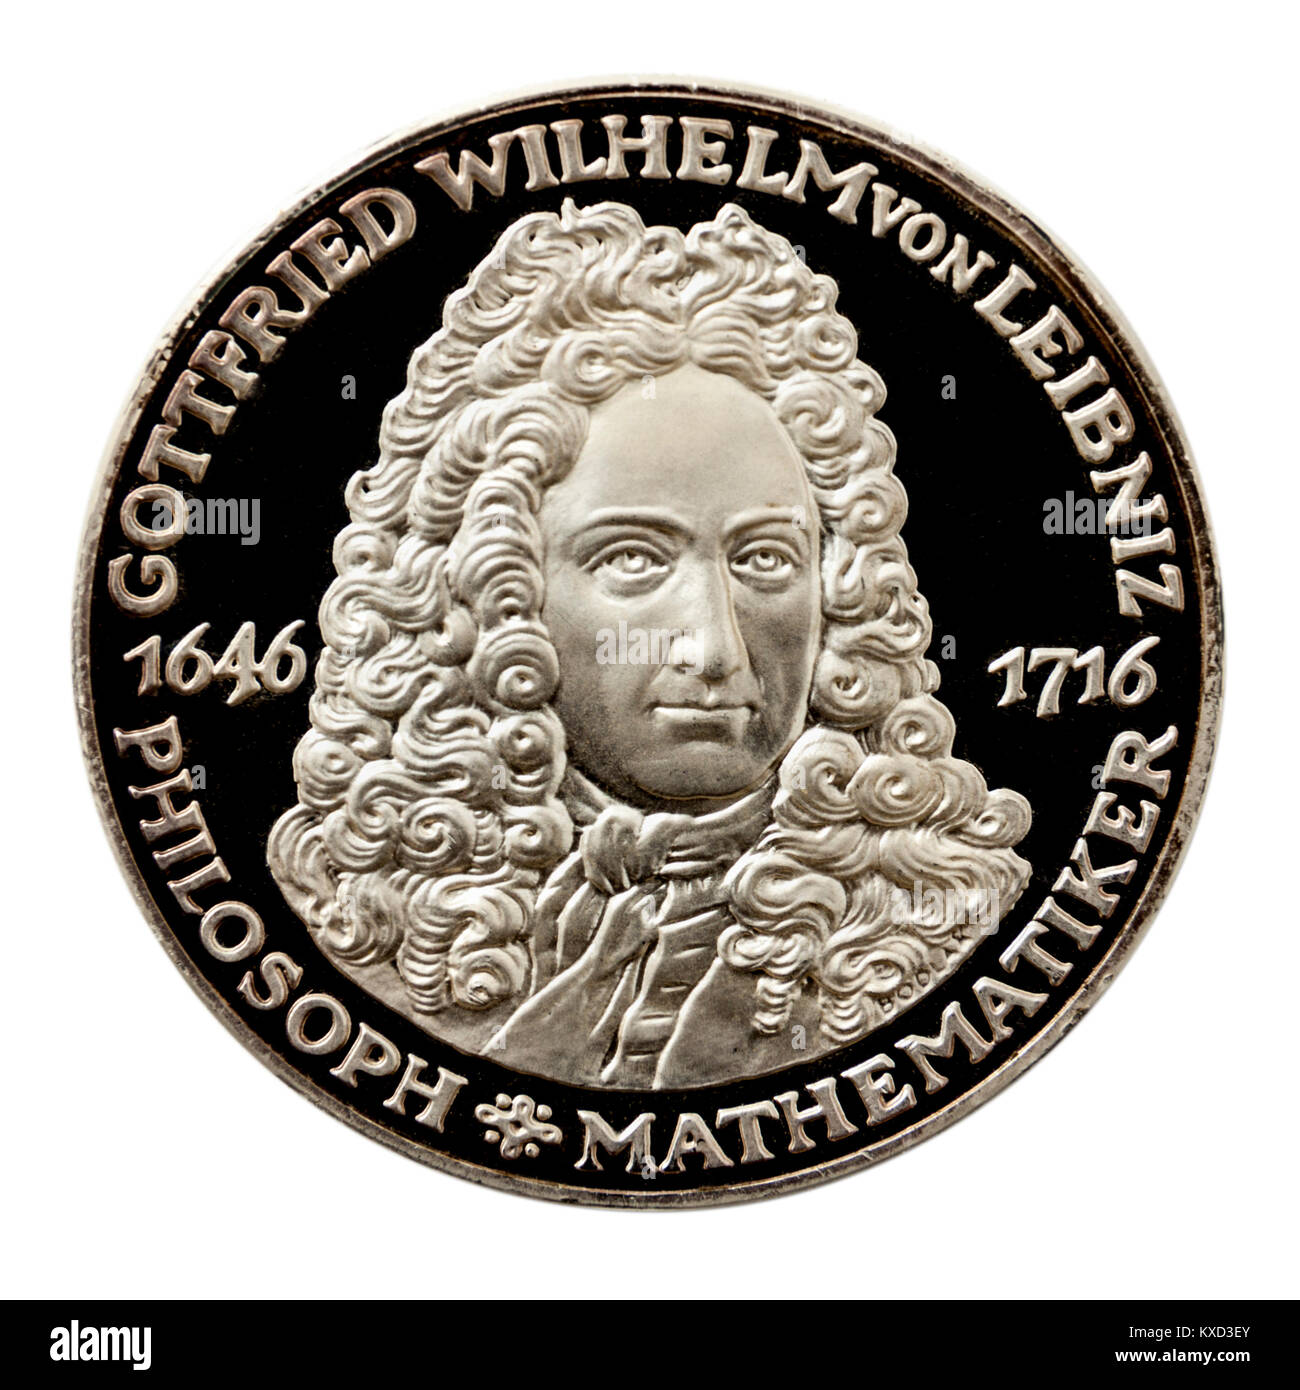 99,9% Prova Silver Medallion dotate di Gottfried Wilhelm von Leibniz (1646-1716), il matematico tedesco famoso per inventare il Leibniz-ruota. Foto Stock